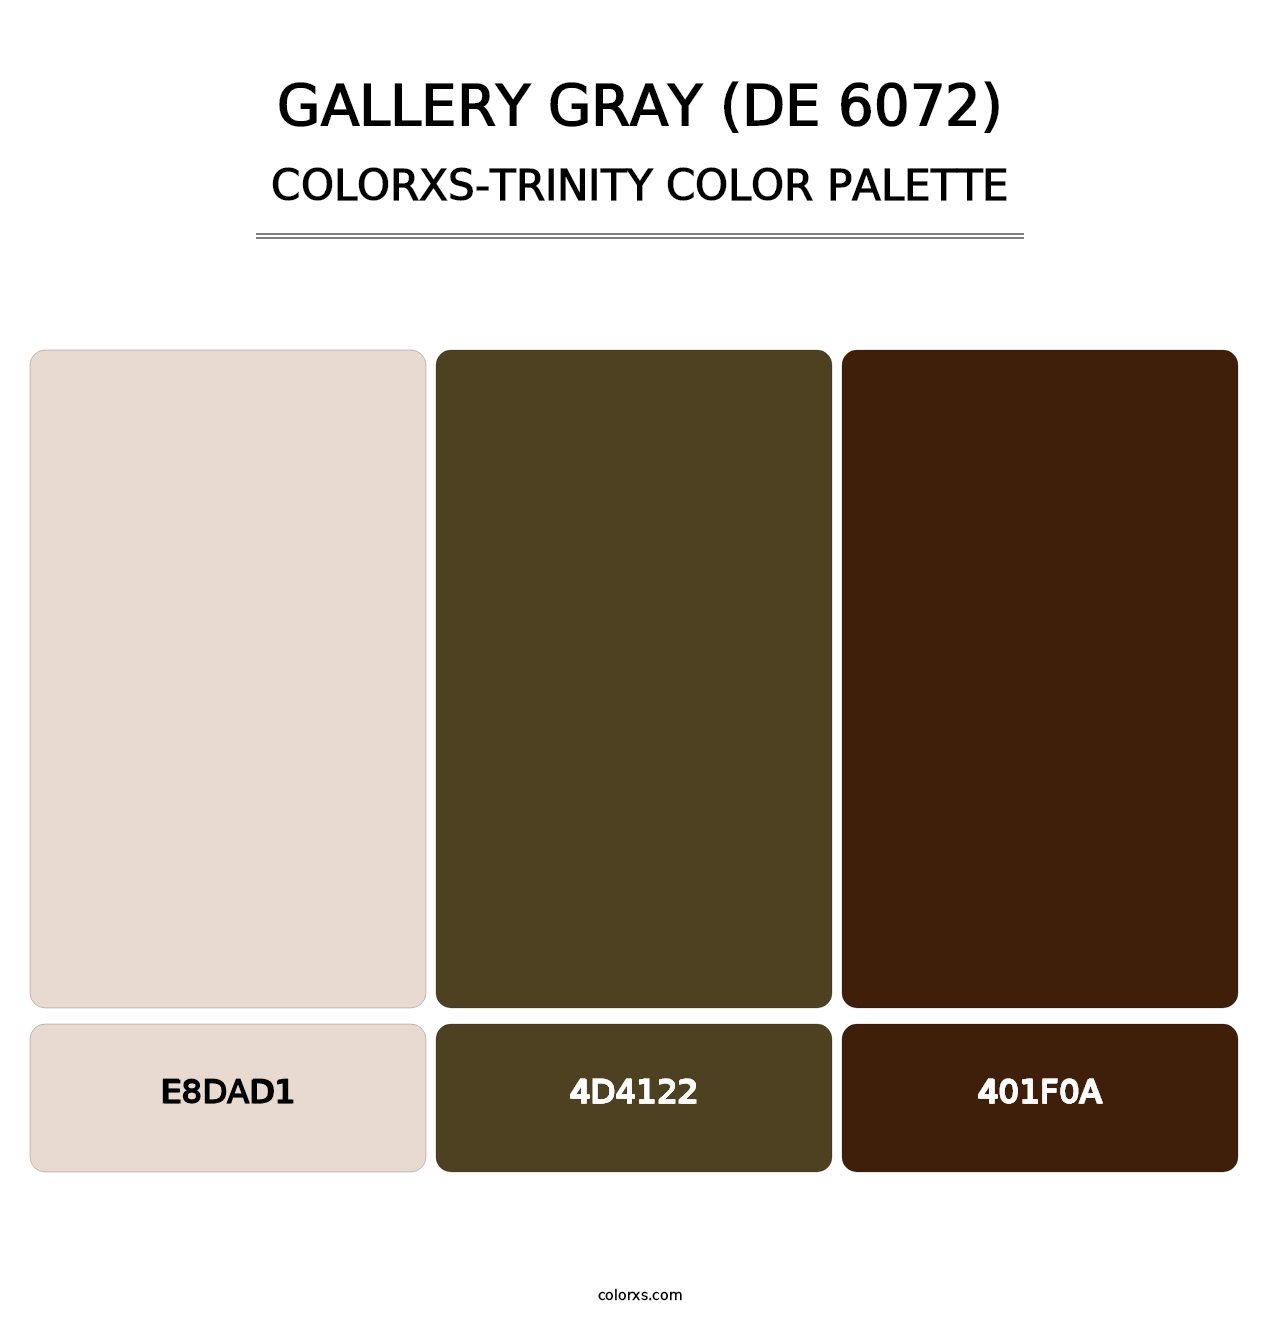 Gallery Gray (DE 6072) - Colorxs Trinity Palette